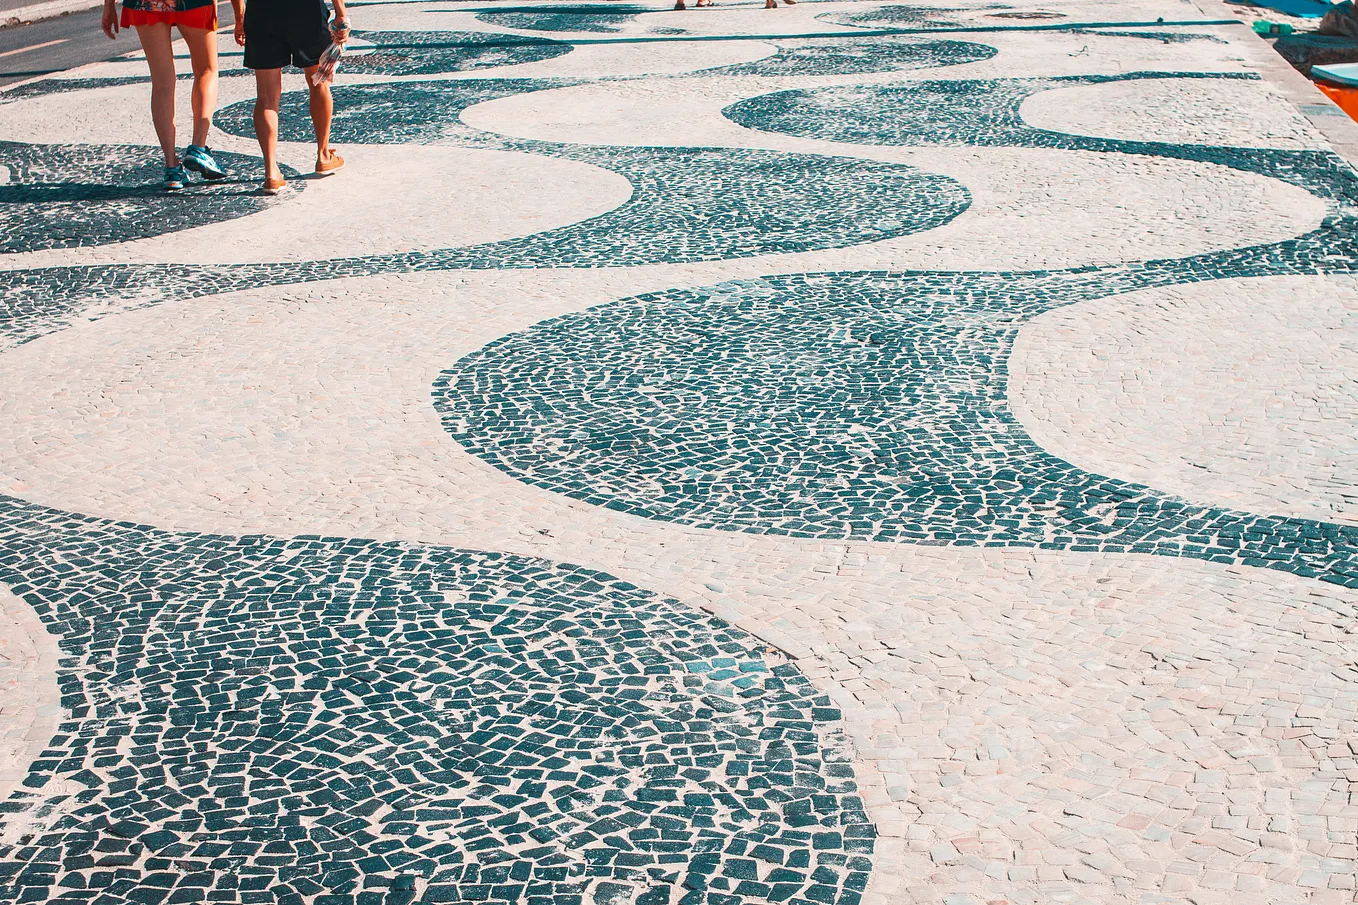 A closeup of the iconic undulating tile boardwalk of Rio’s Copacabana Beach